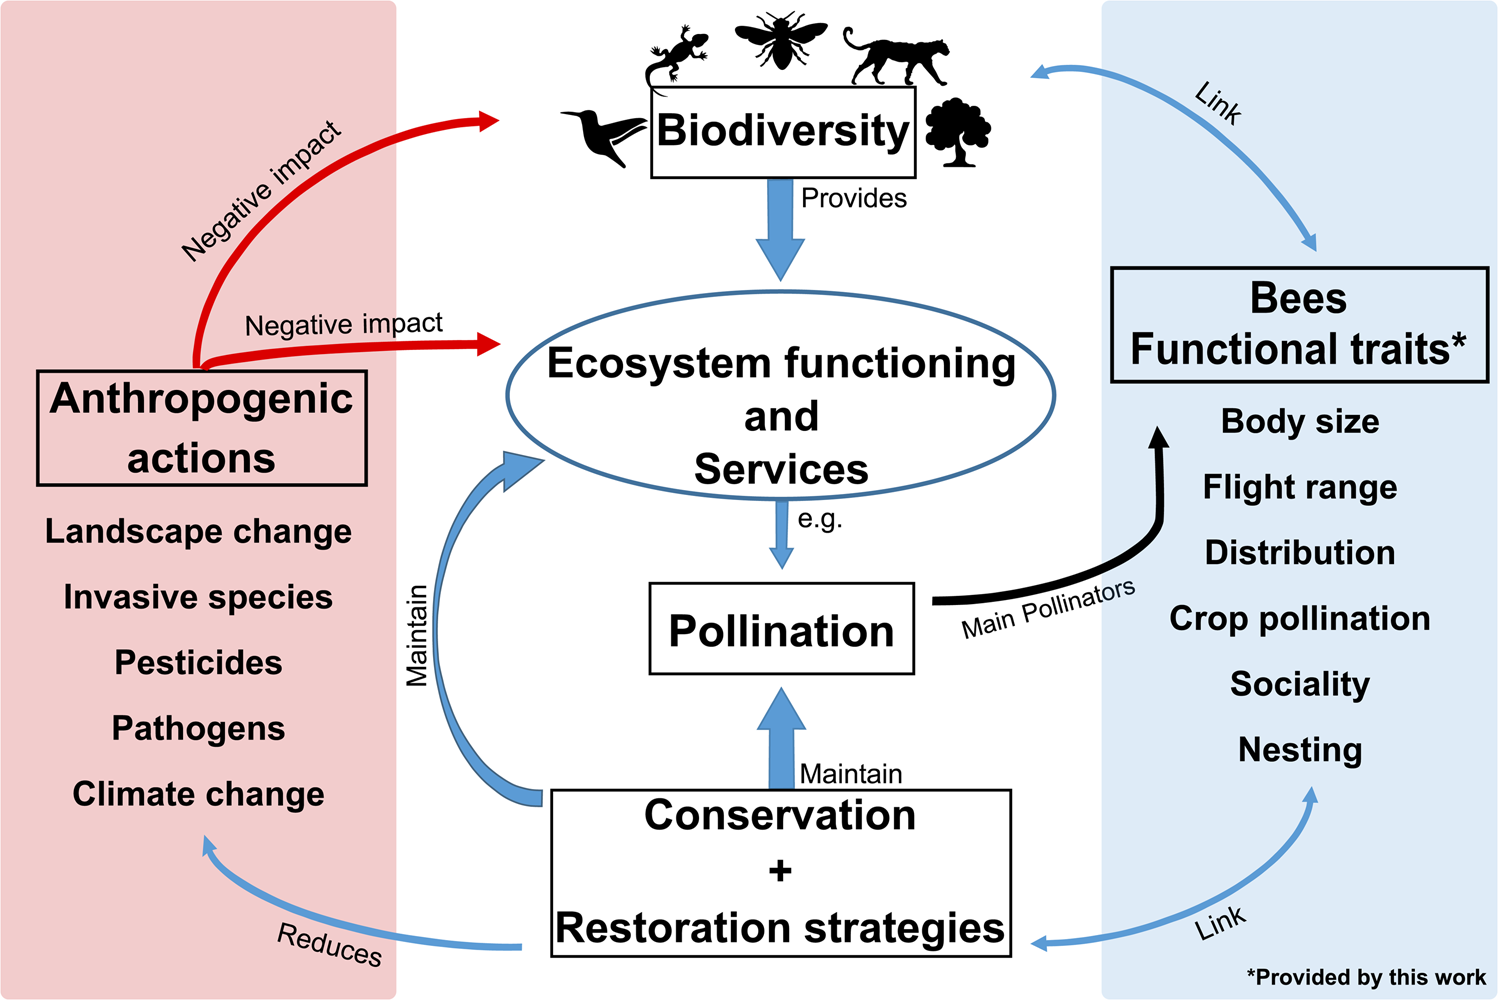 III. Benefits of Beekeeping for Ecological Restoration